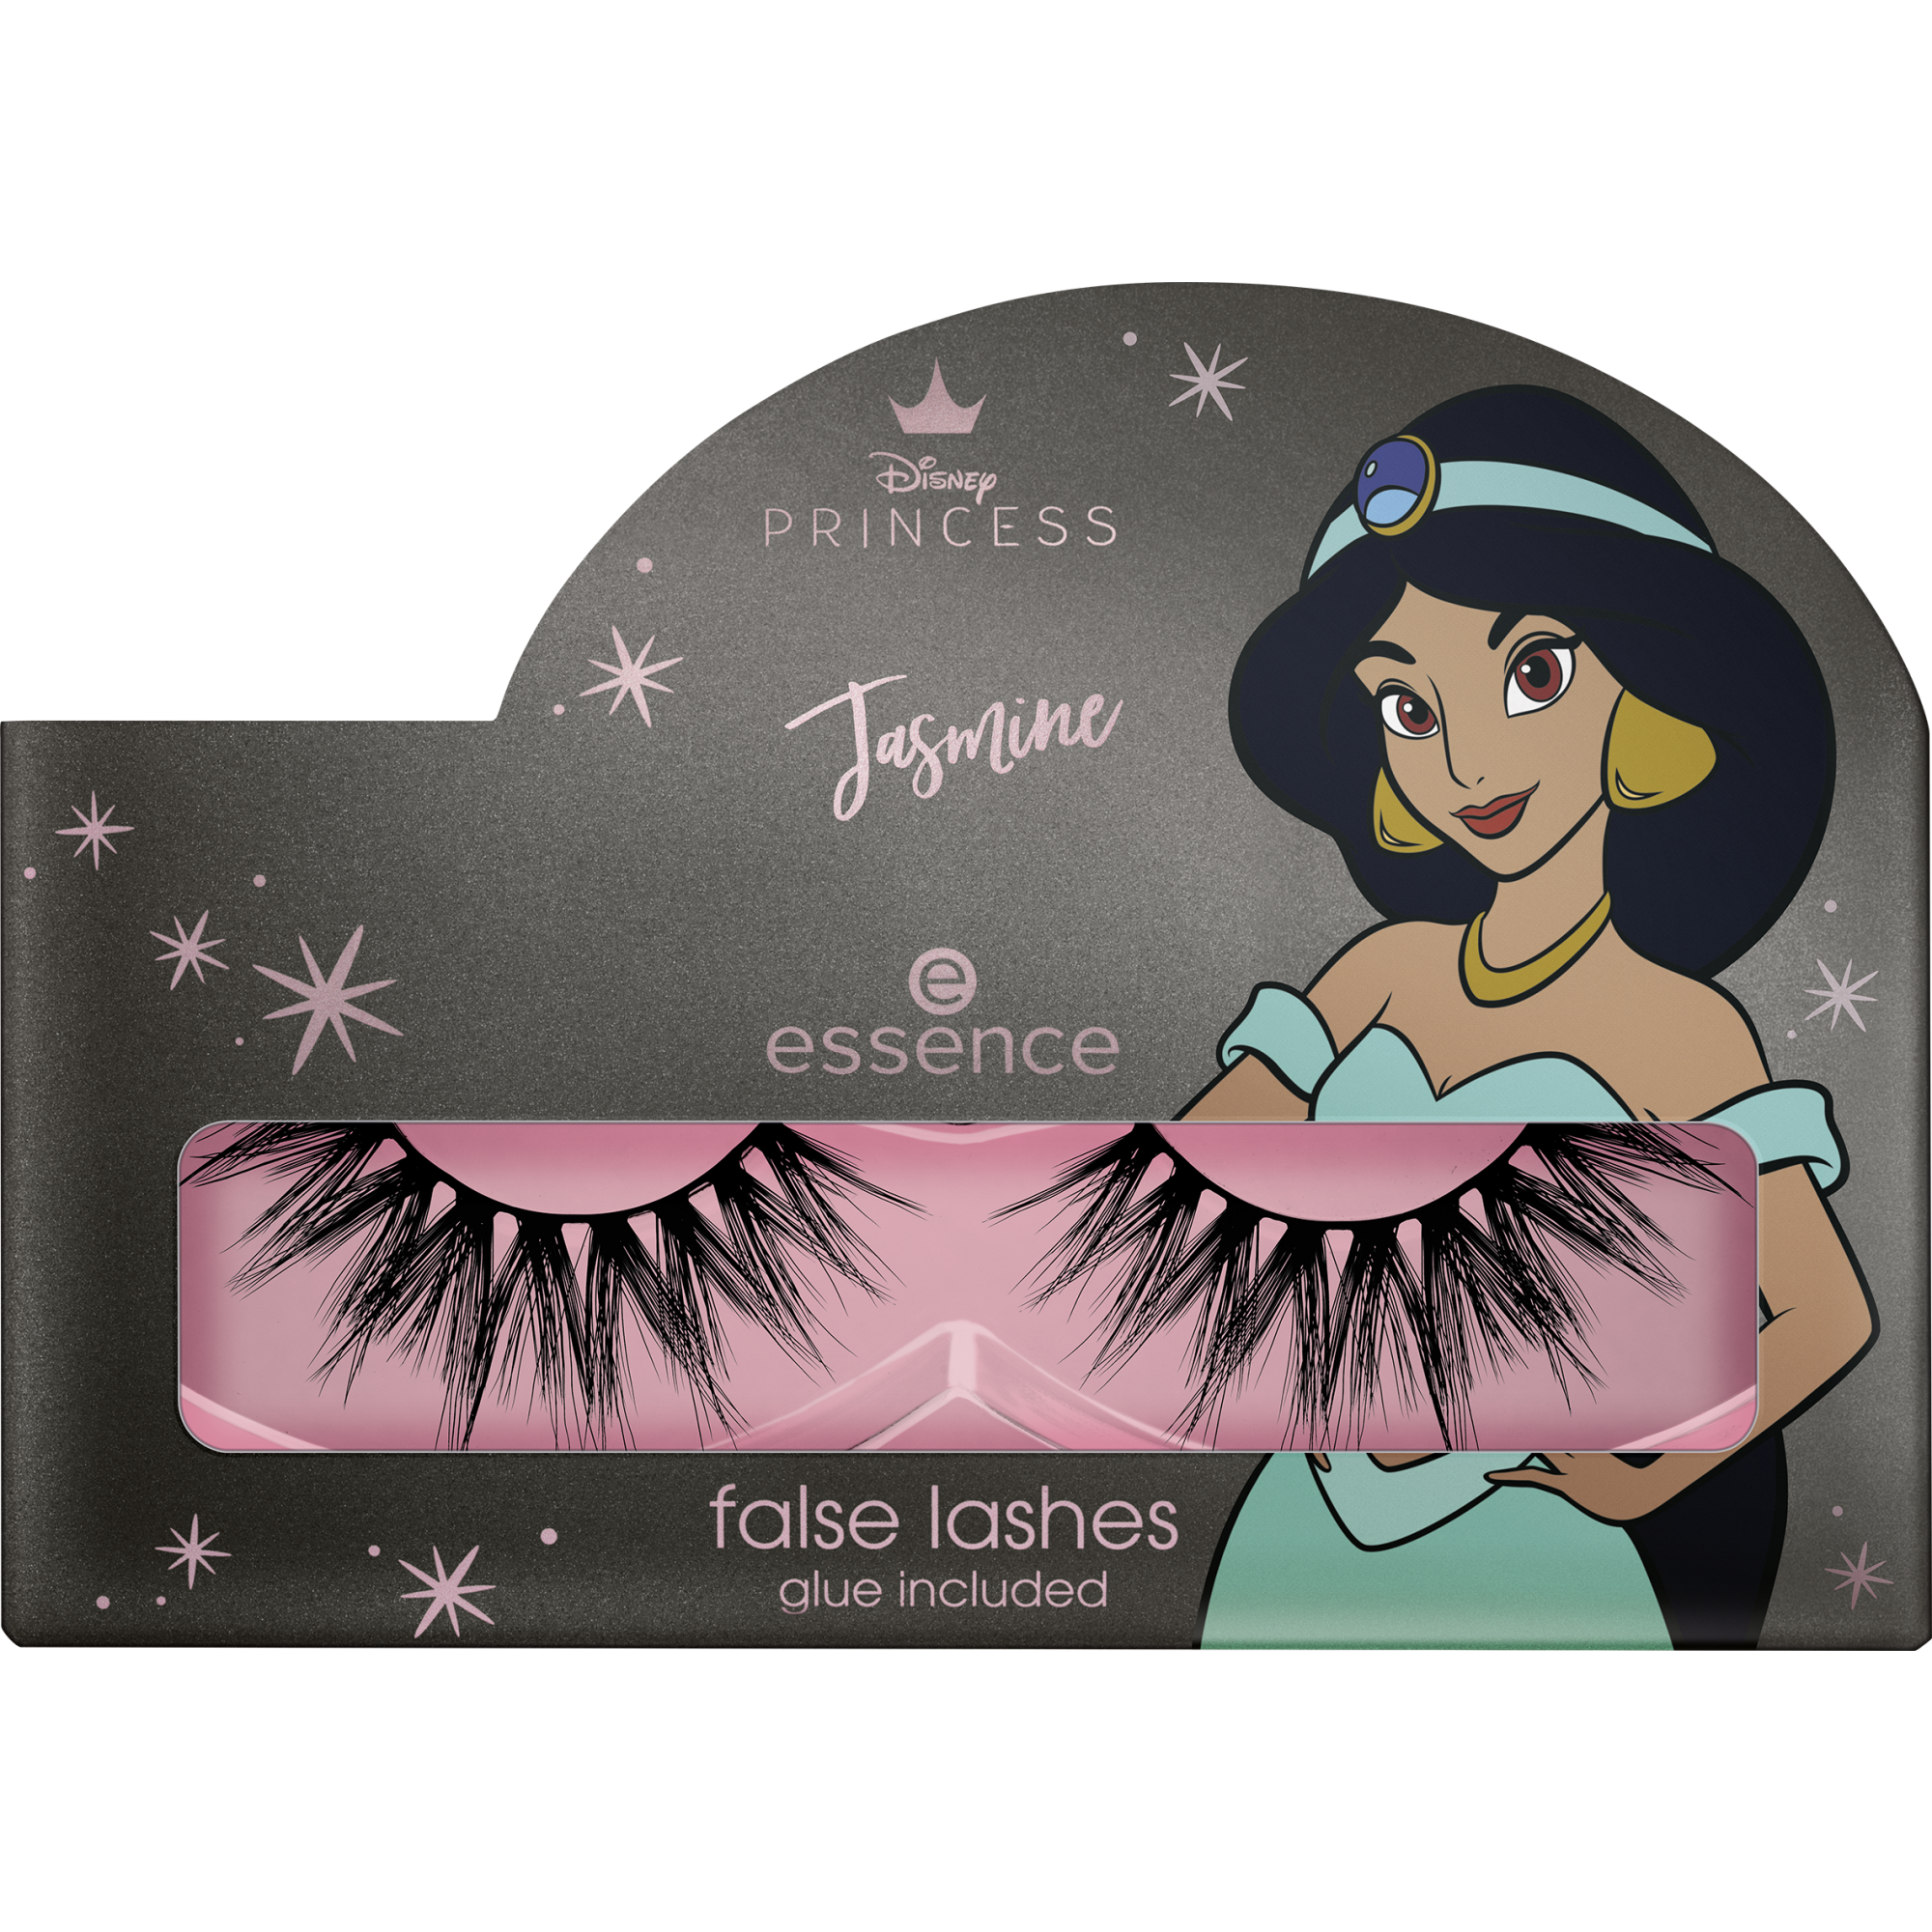 Disney Princess Jasmine false lashes